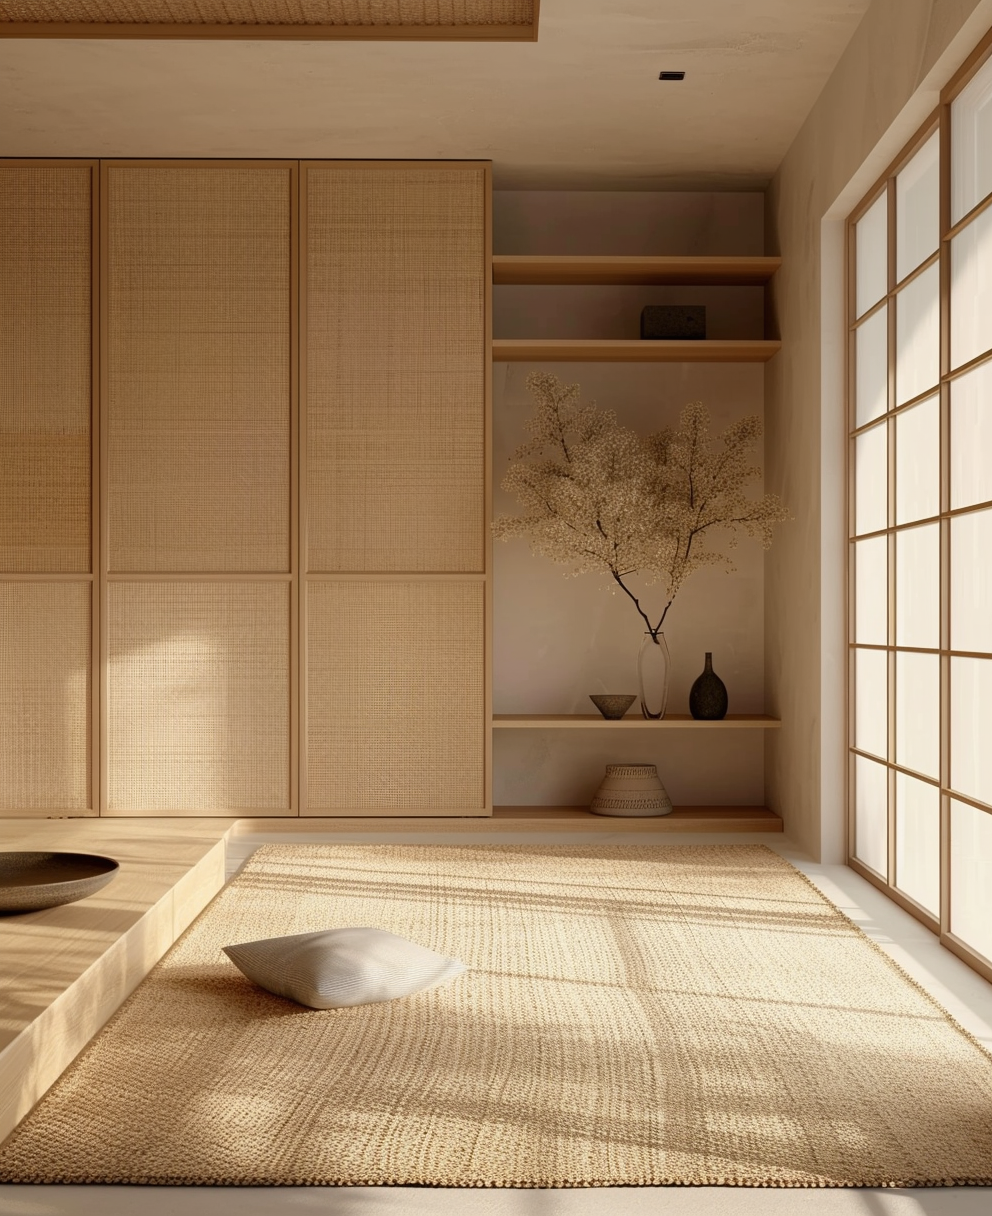 Japanese hallway renovation highlighting minimalist aesthetics and practicality